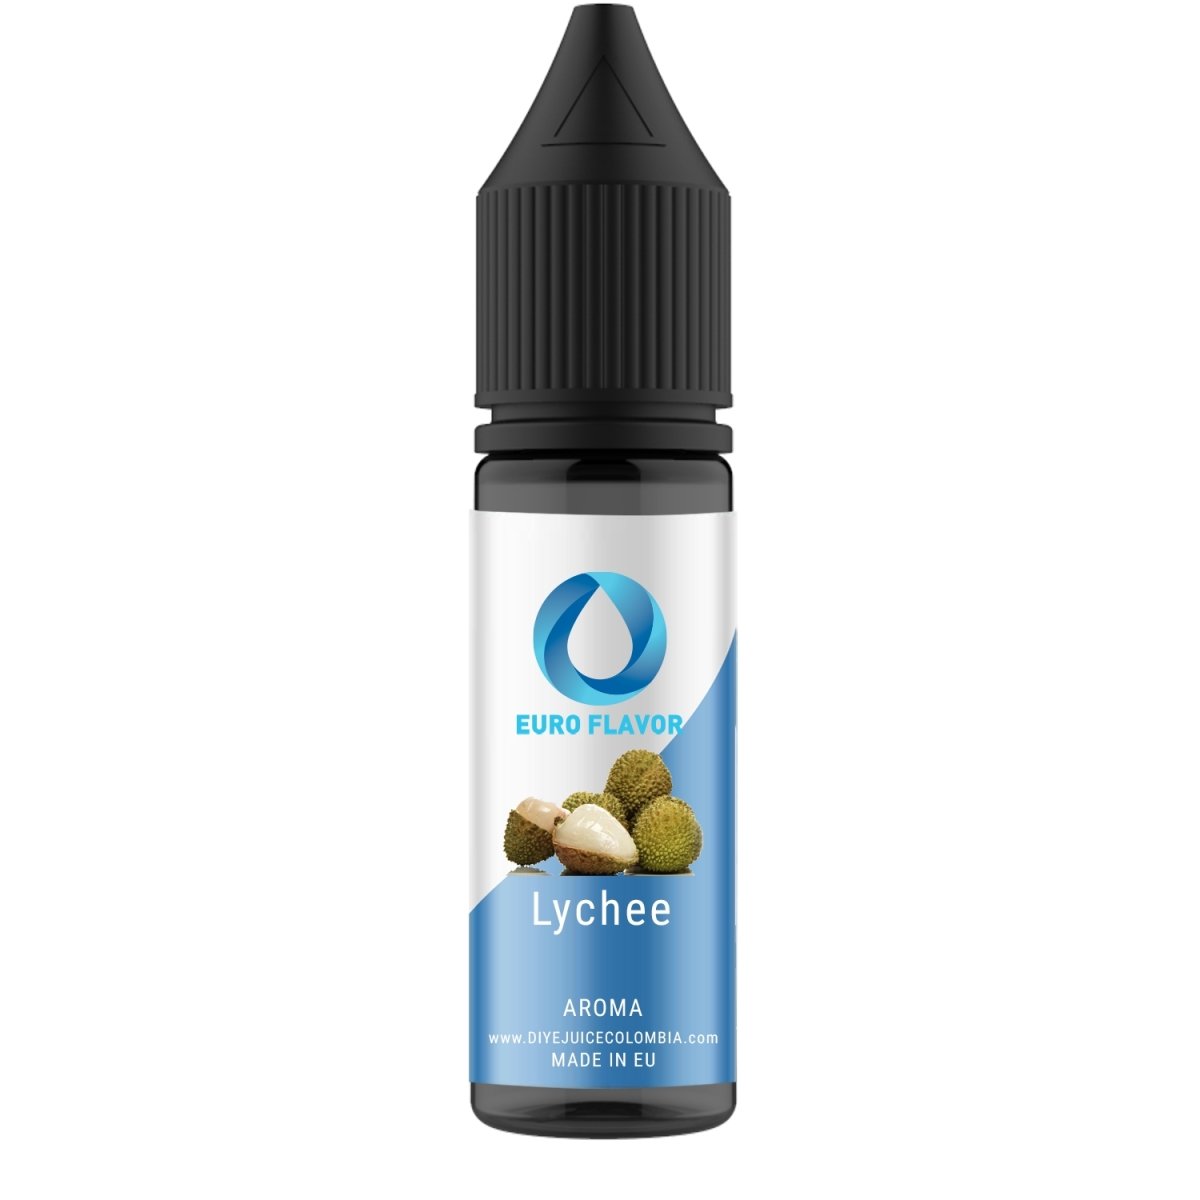 Lychee EF - Euro Flavor - Aroma - DIY VAPE SHOP | AR-EF-LYC